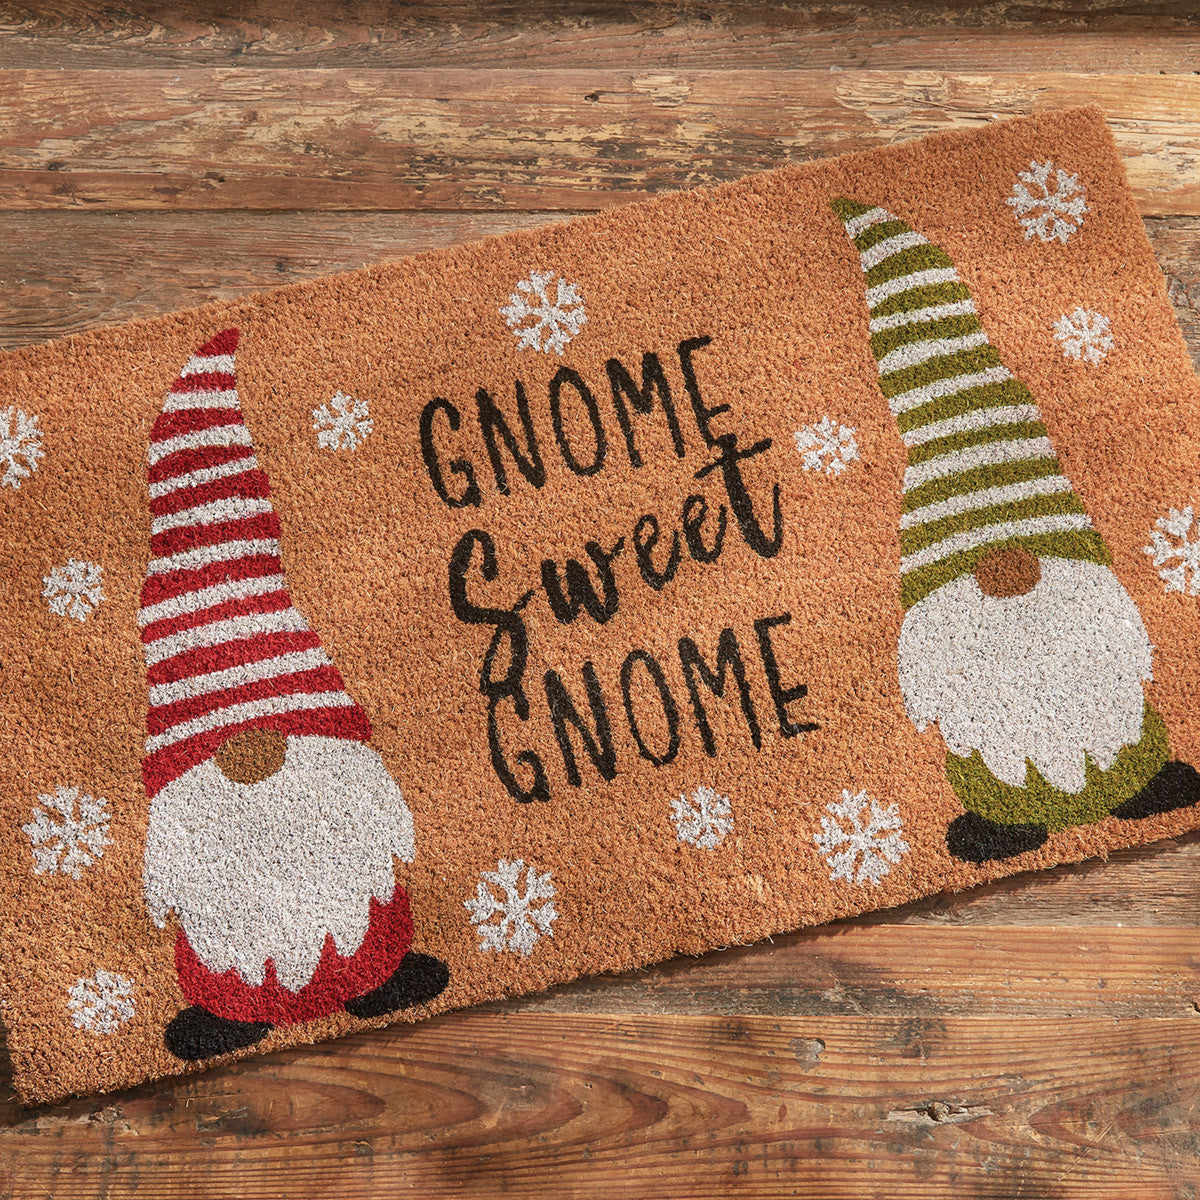 Gnome Sweet Gnome Doormat